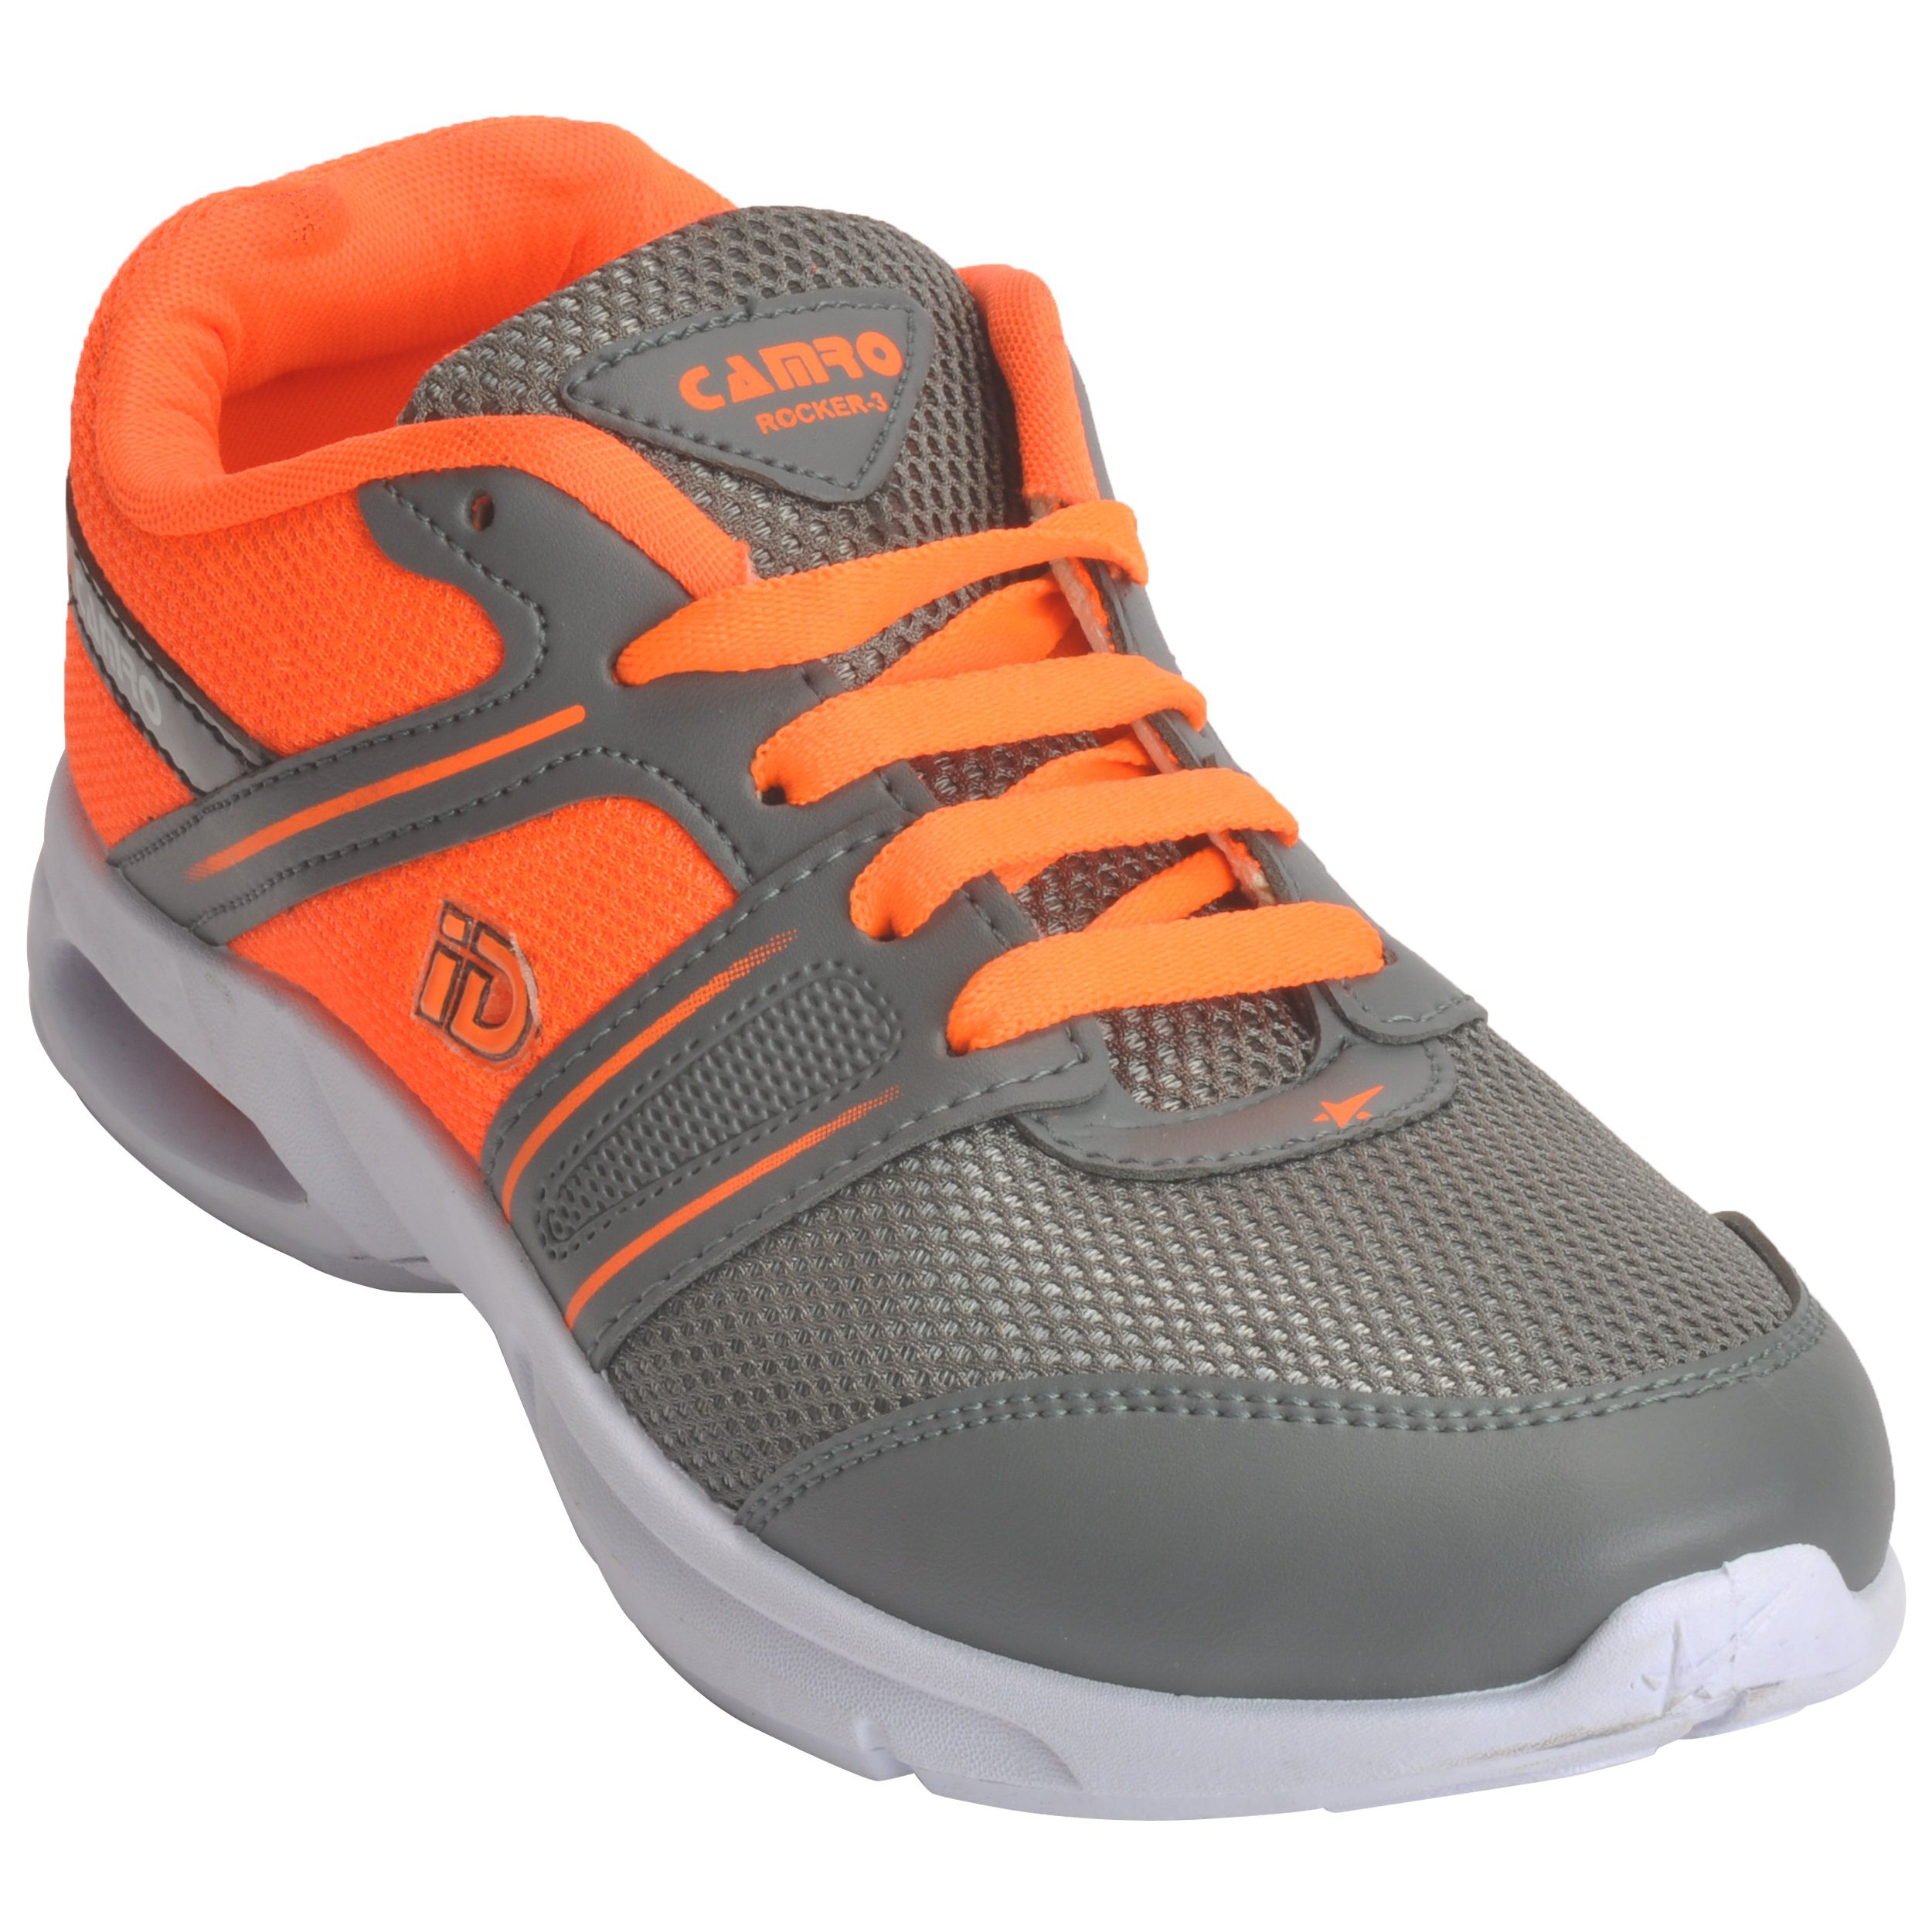 CAMRO Rocker-3 Running Shoes Gray: Buy 